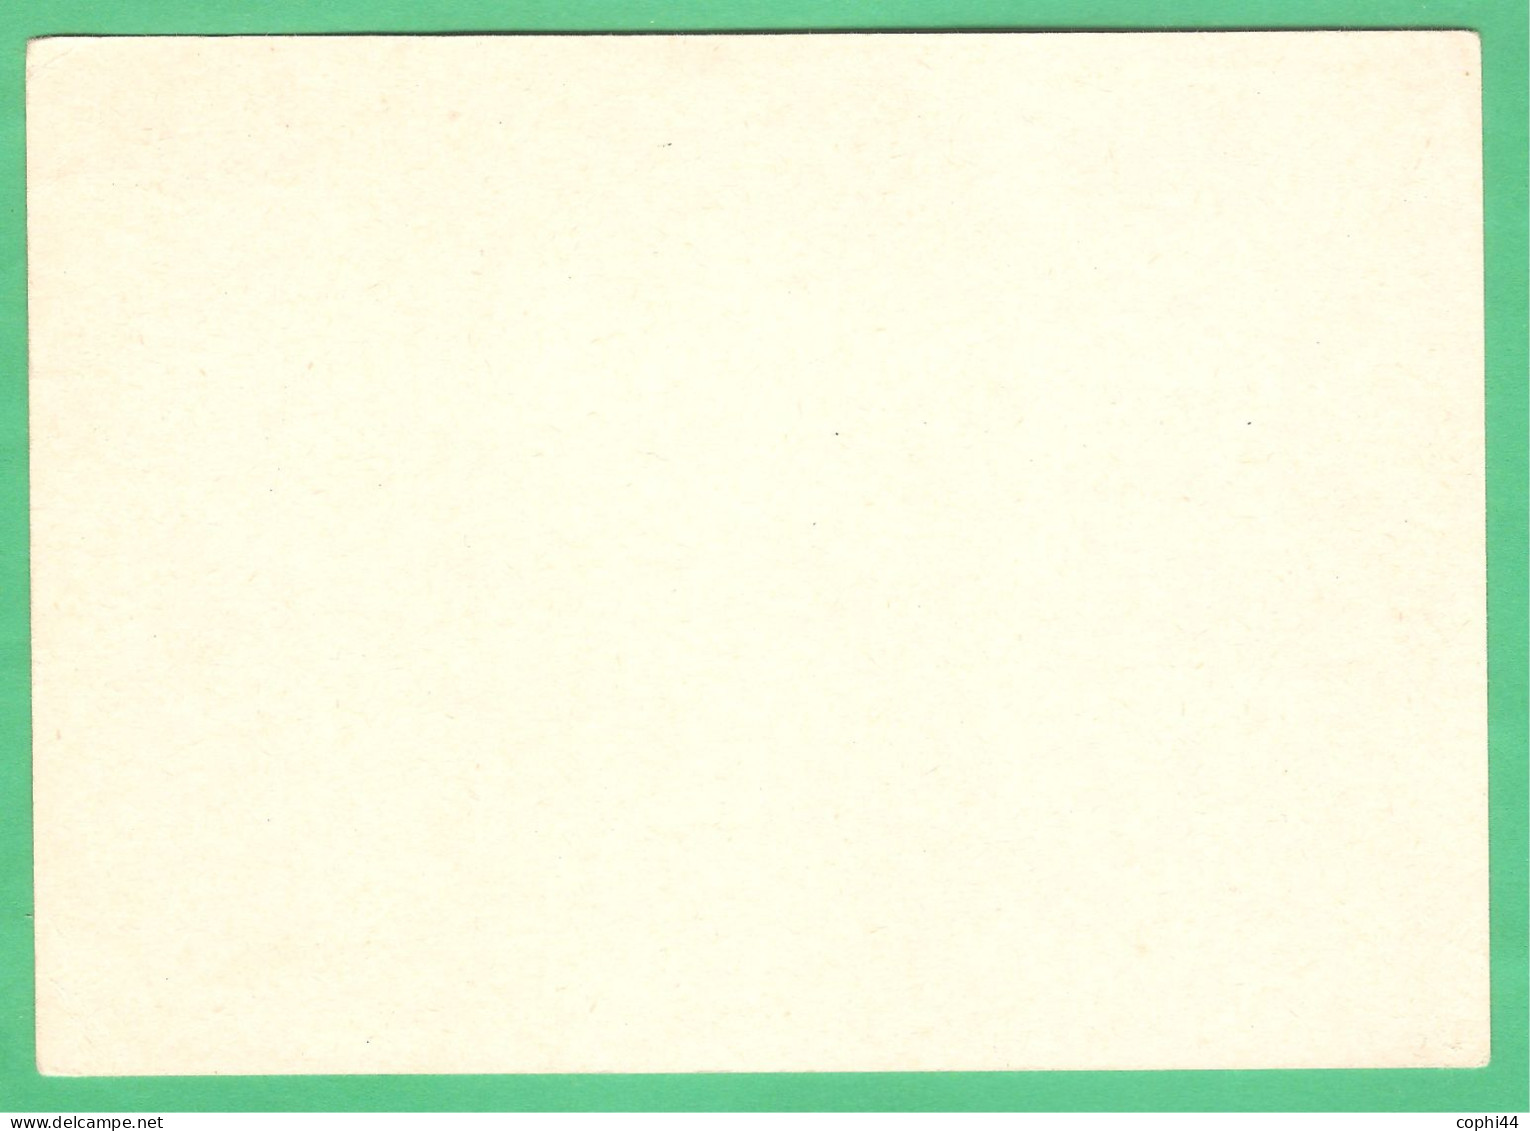 REGNO D'ITALIA 1932 CARTOLINA POSTALE VEIII IMPERIALE 15 C Verde (FILAGRANO C79) NUOVA - Stamped Stationery